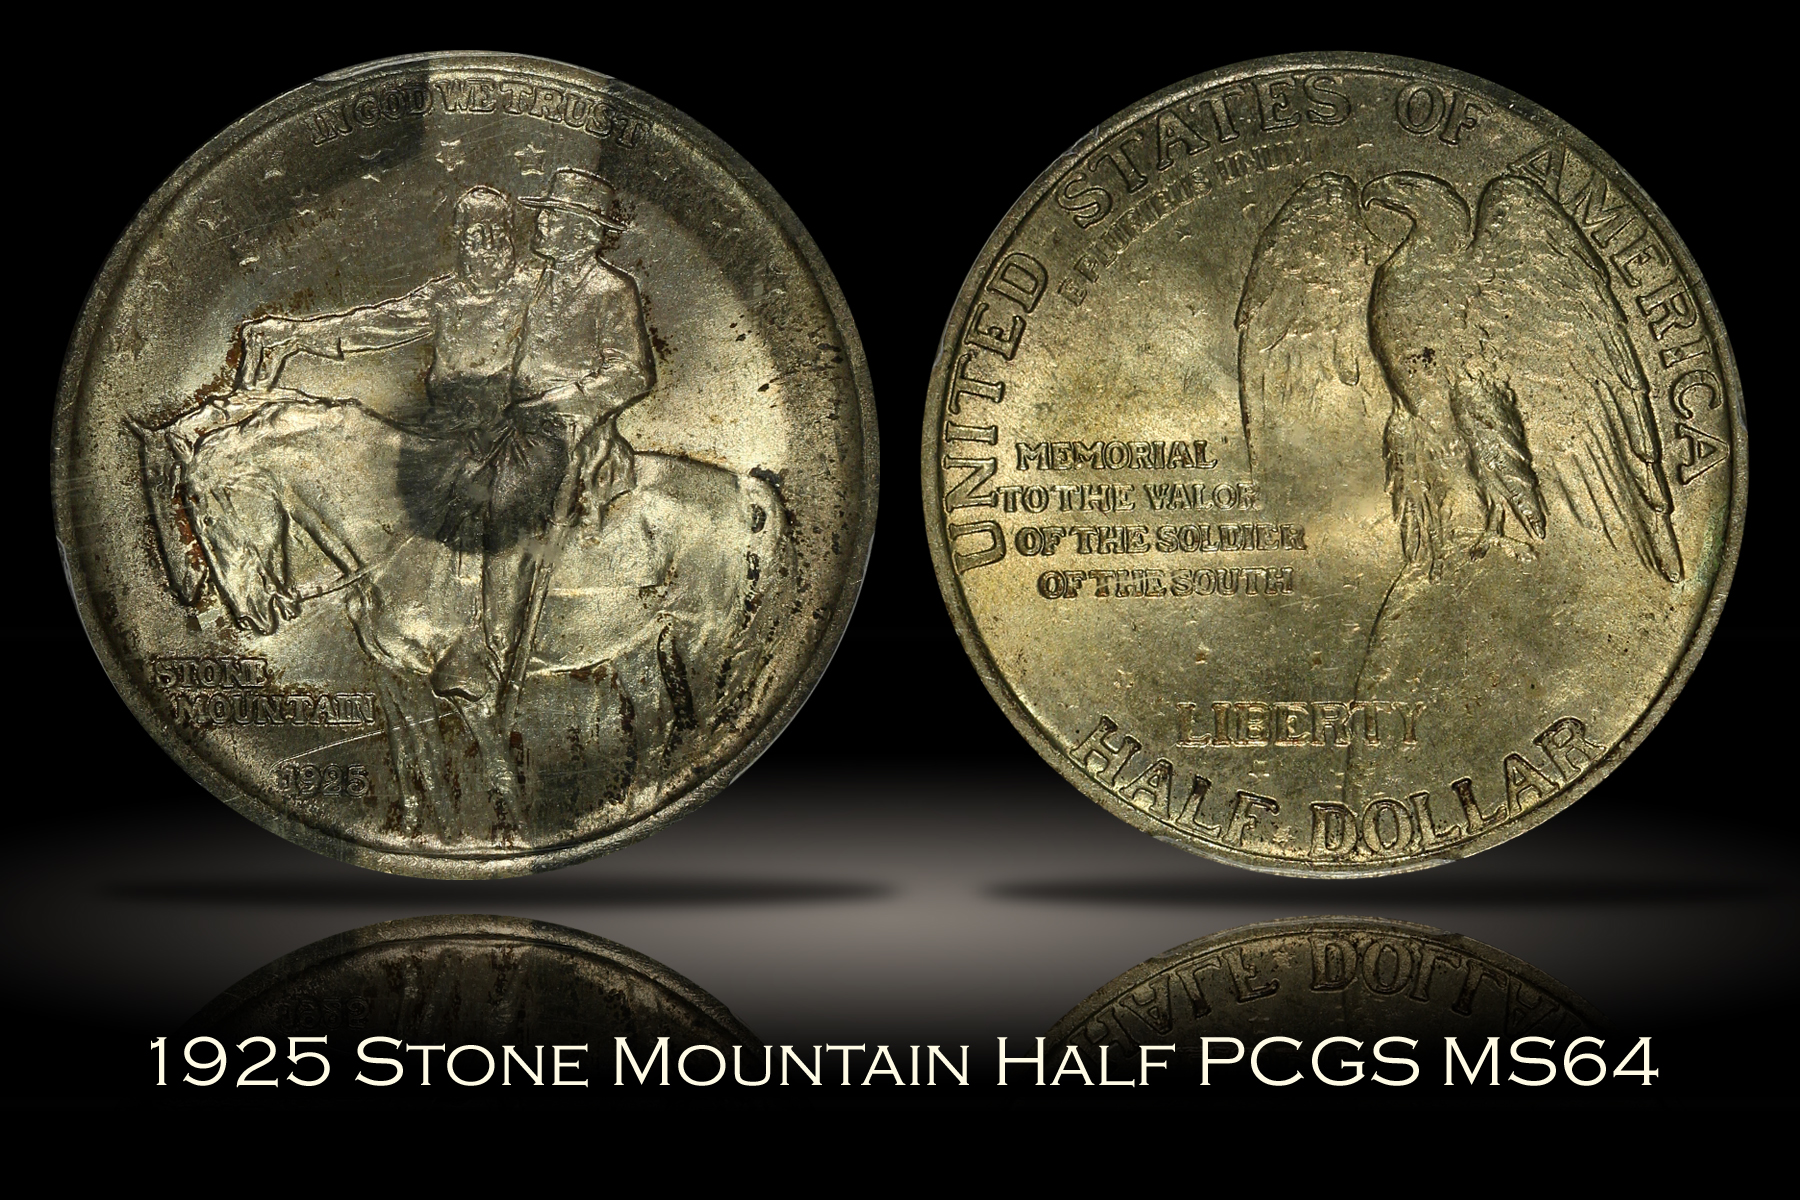 1925 Stone Mountain Half PCGS MS64